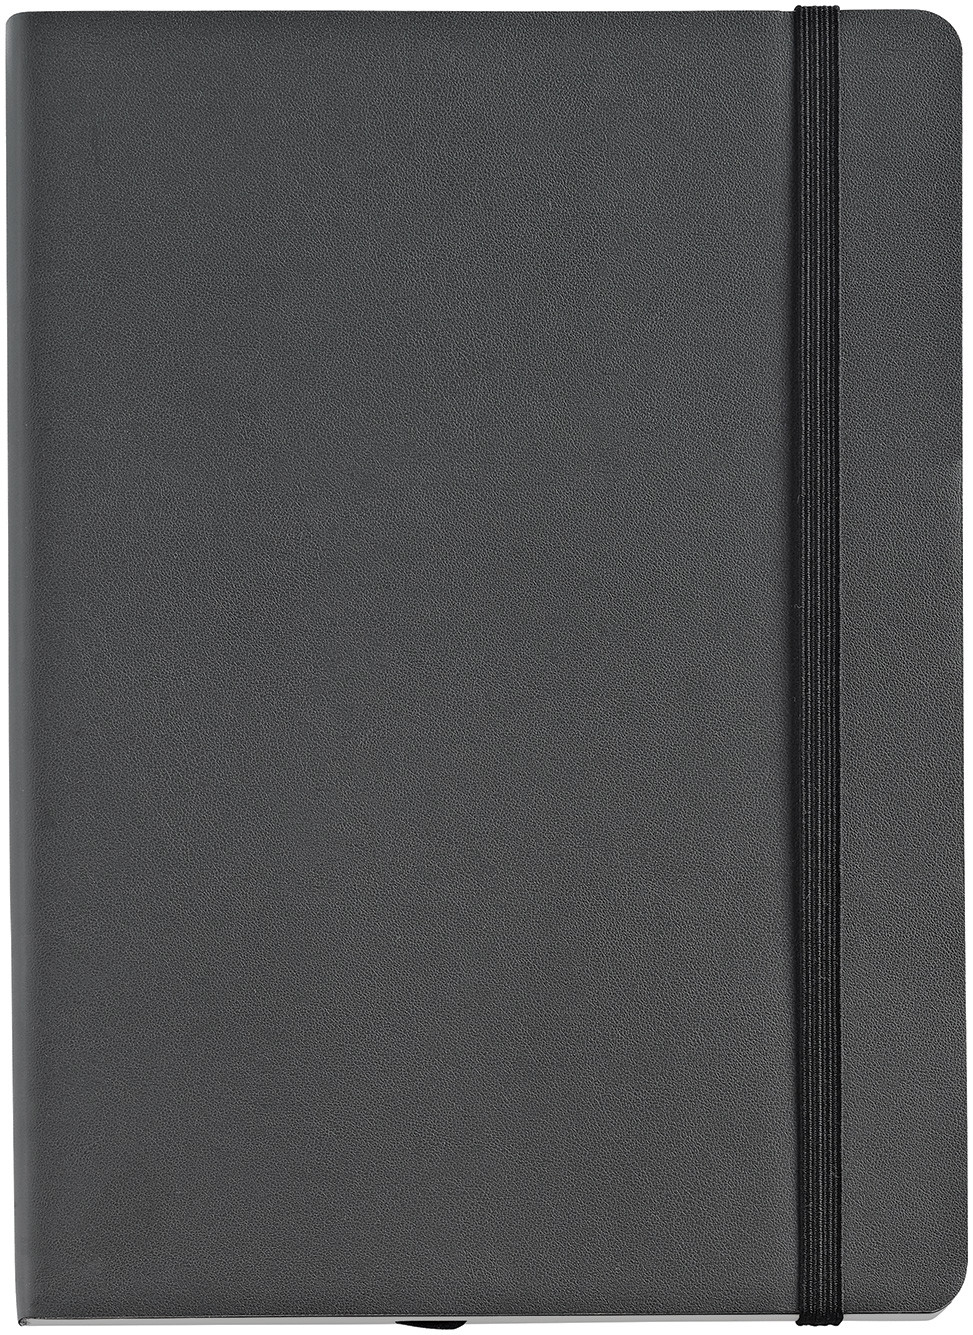 Sheaffer Ruled Journal - Grey - Large